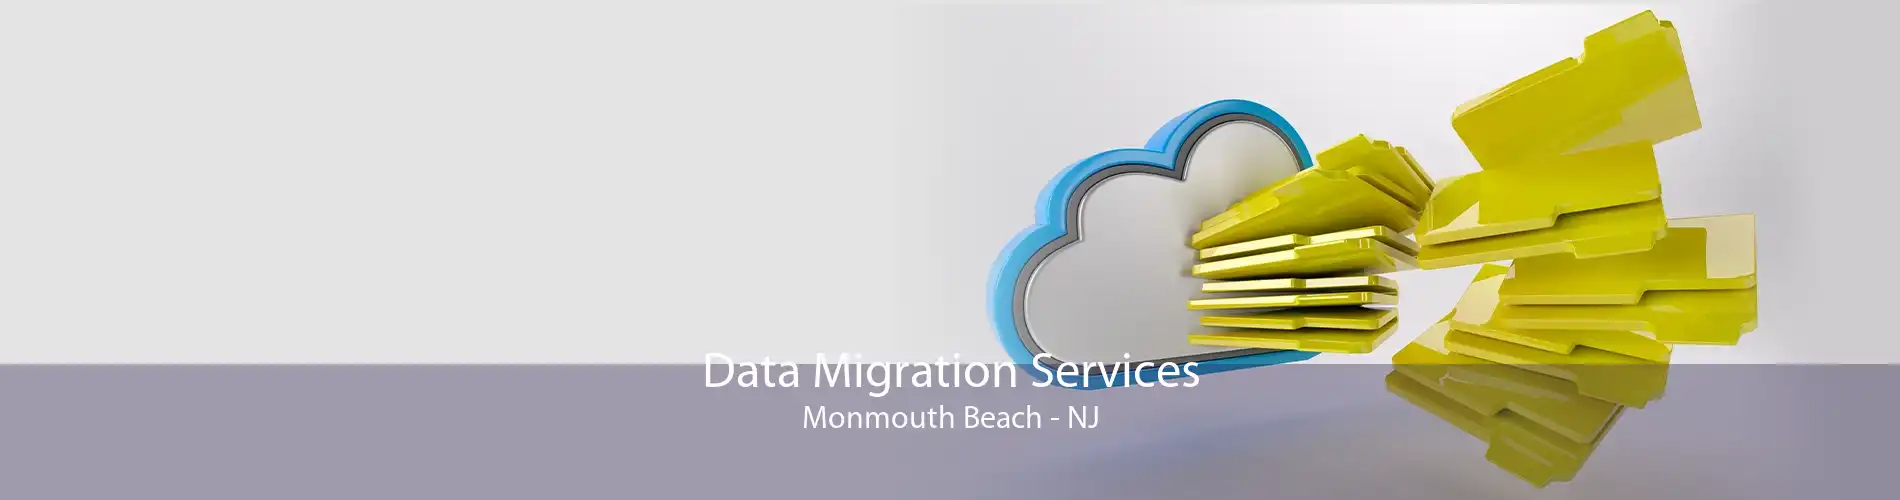 Data Migration Services Monmouth Beach - NJ